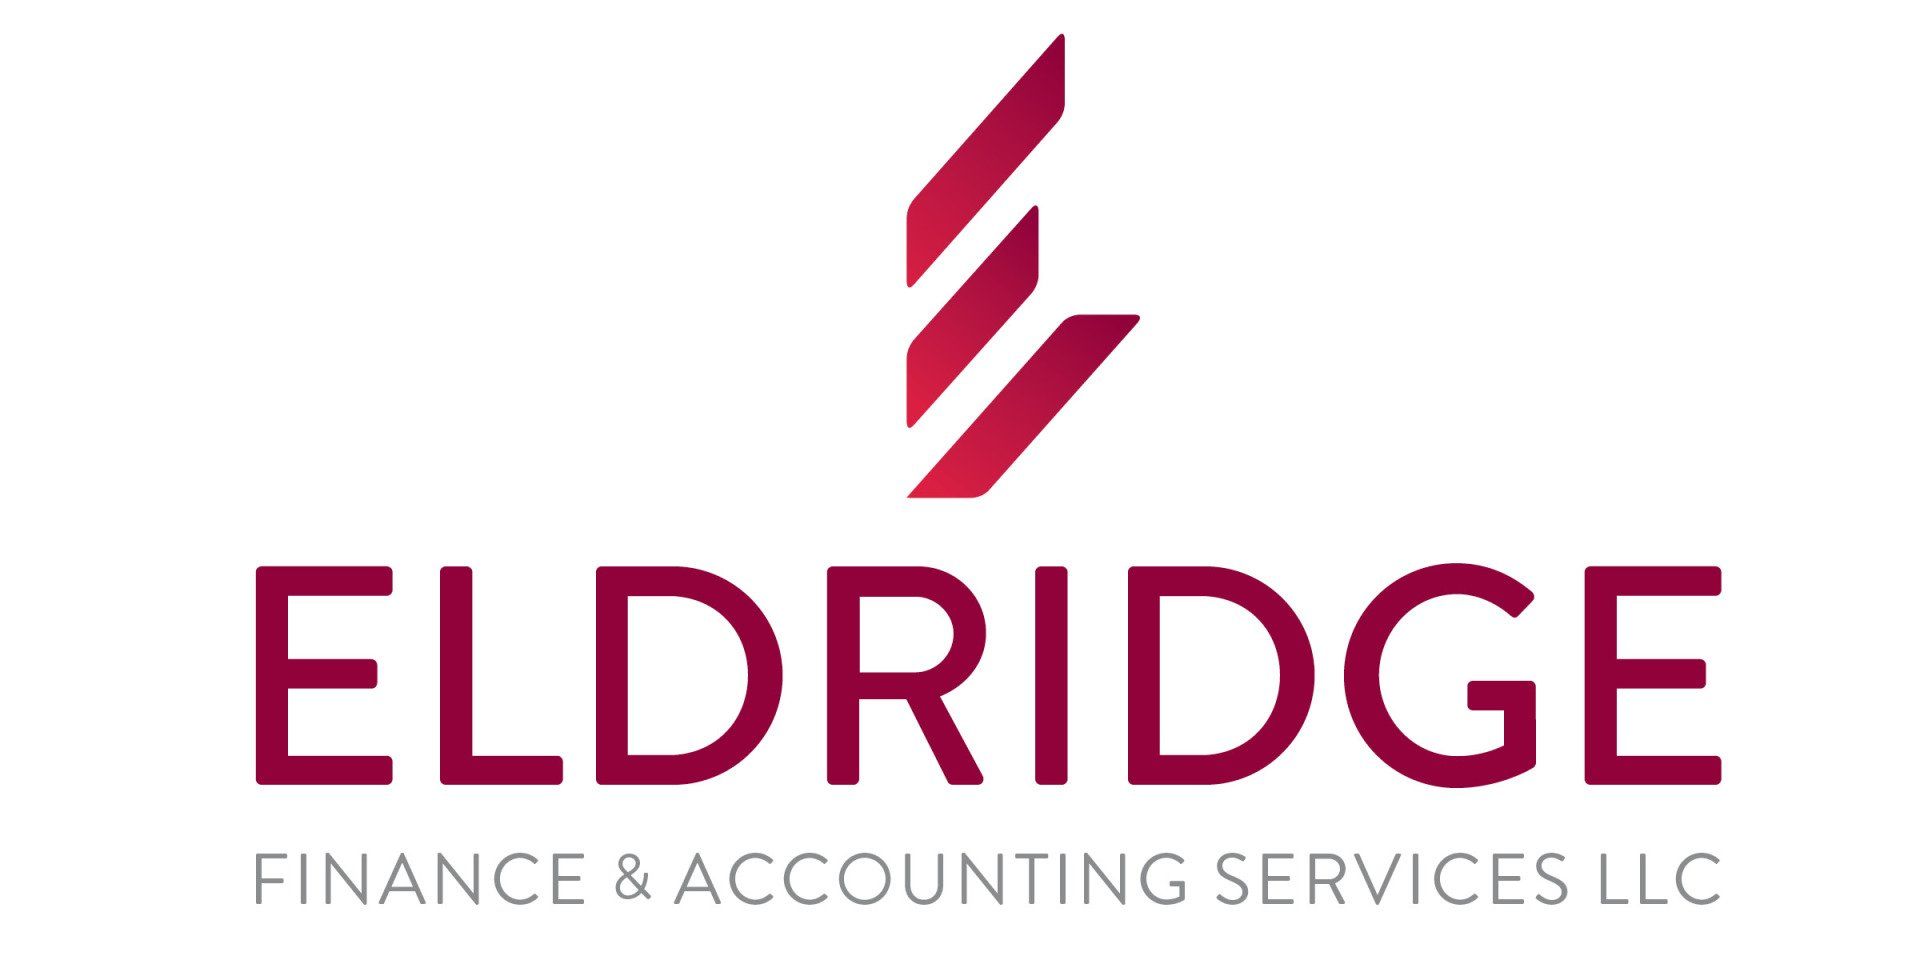 Eldridge Finance & Accounting